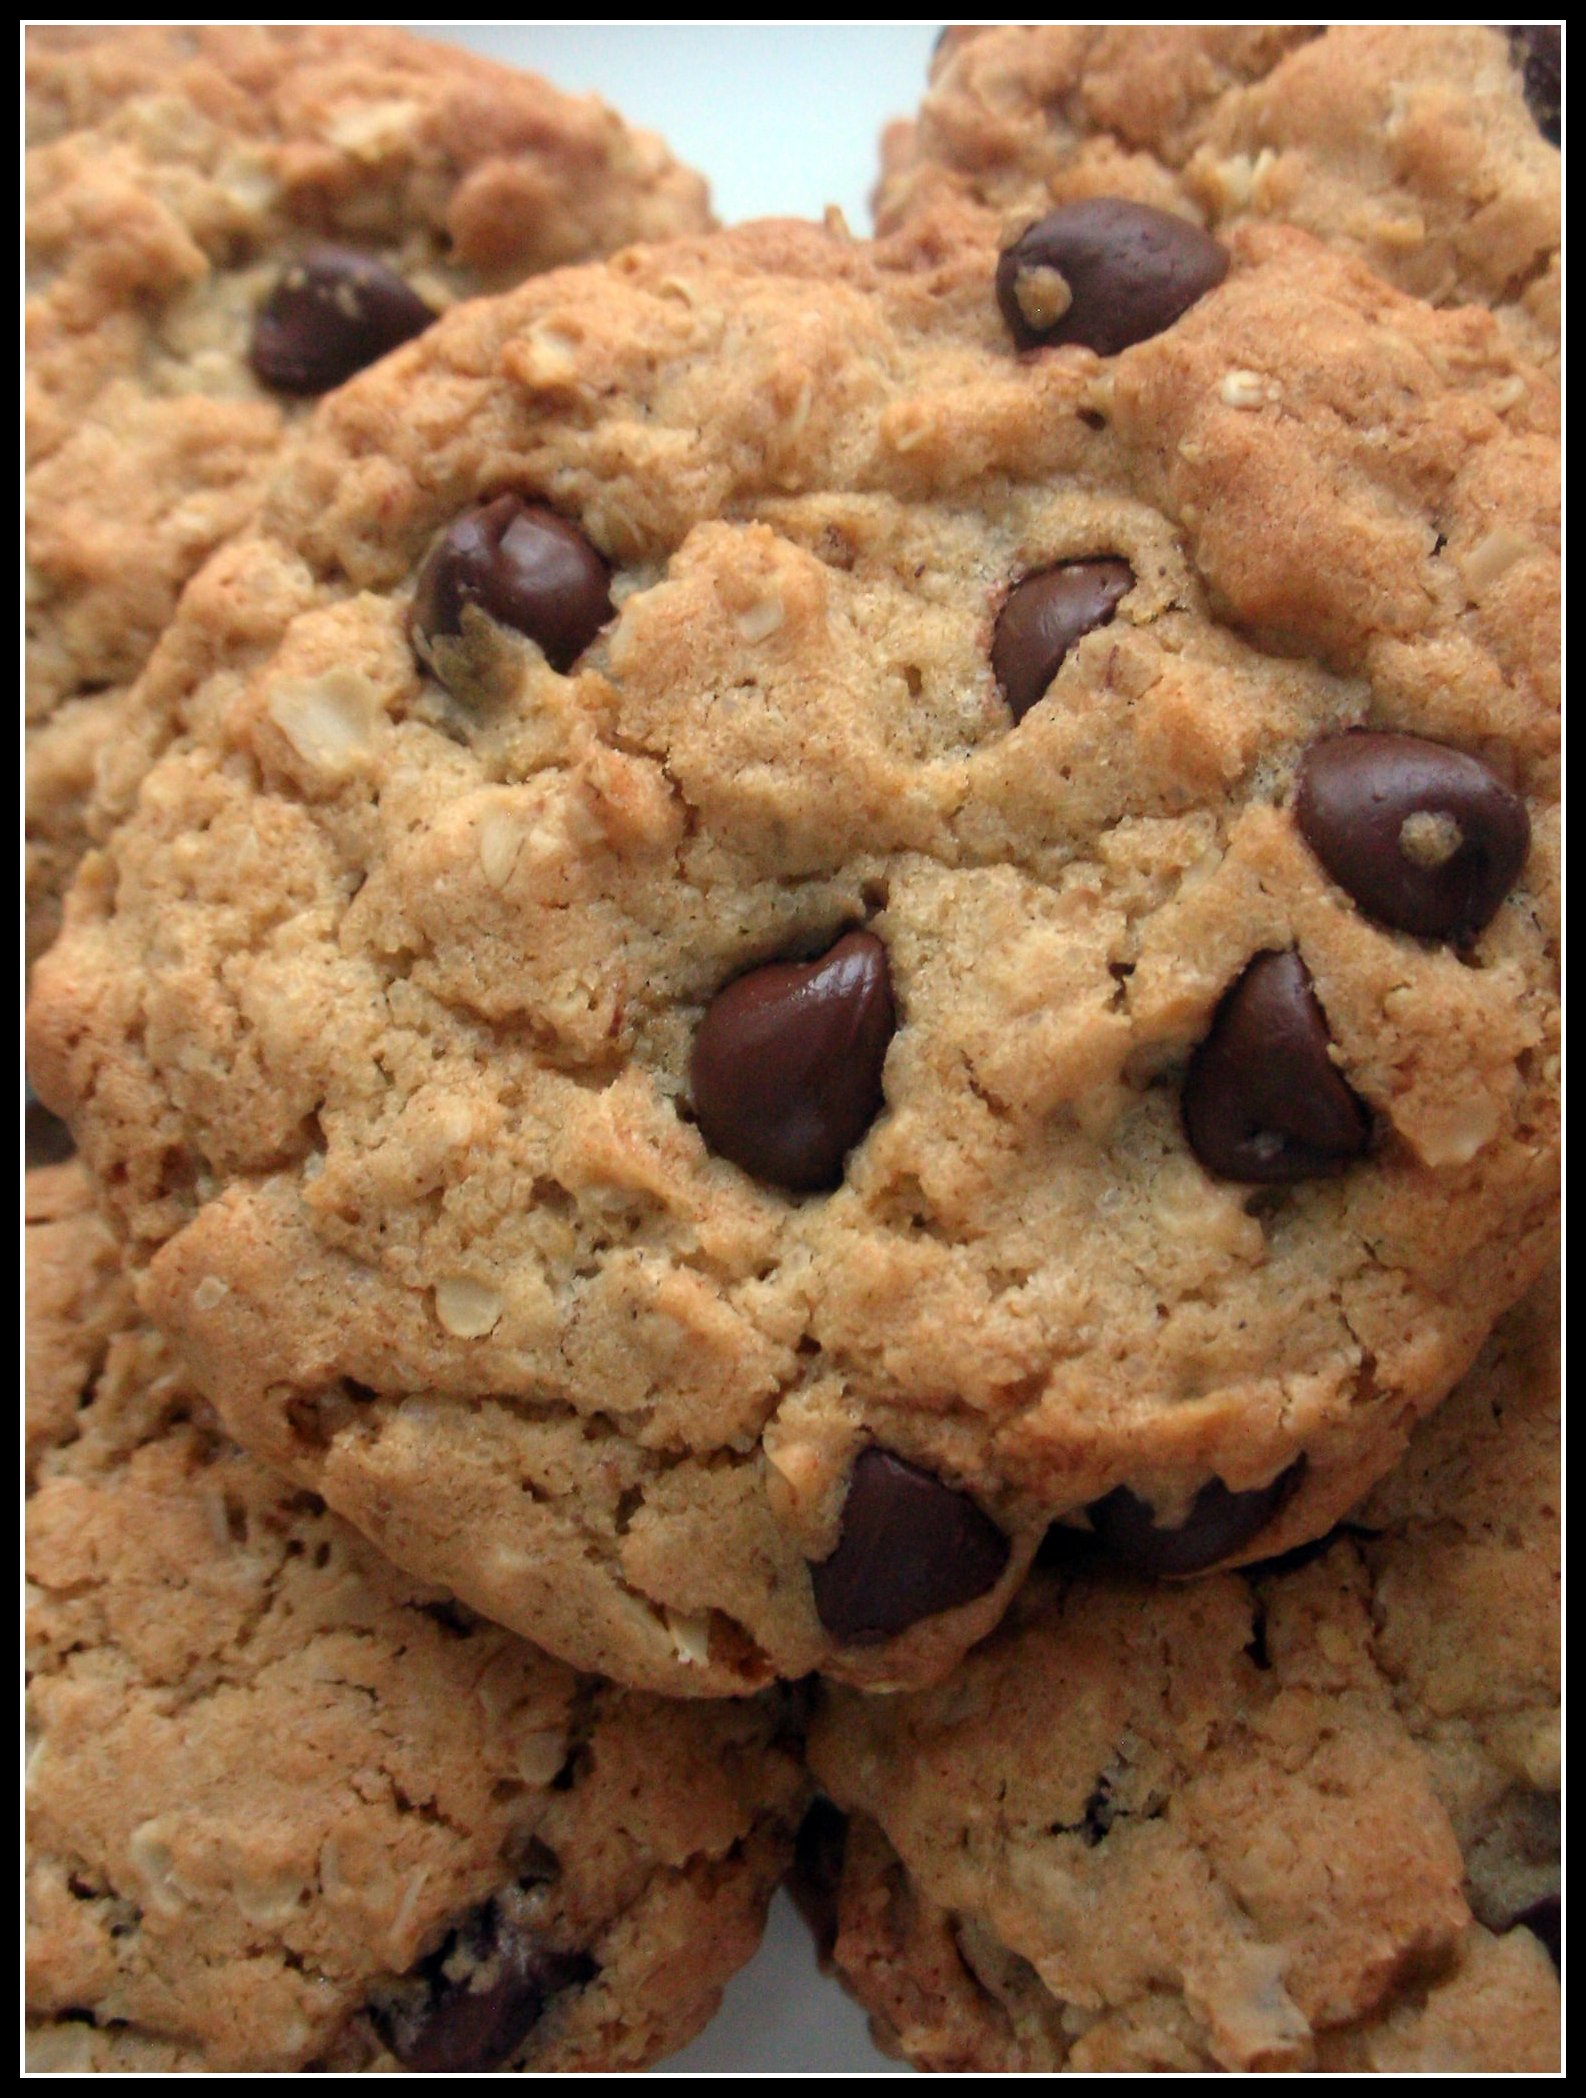 File:Chocolate Chip Oatmeal Cookies detail.jpg - Wikimedia Commons